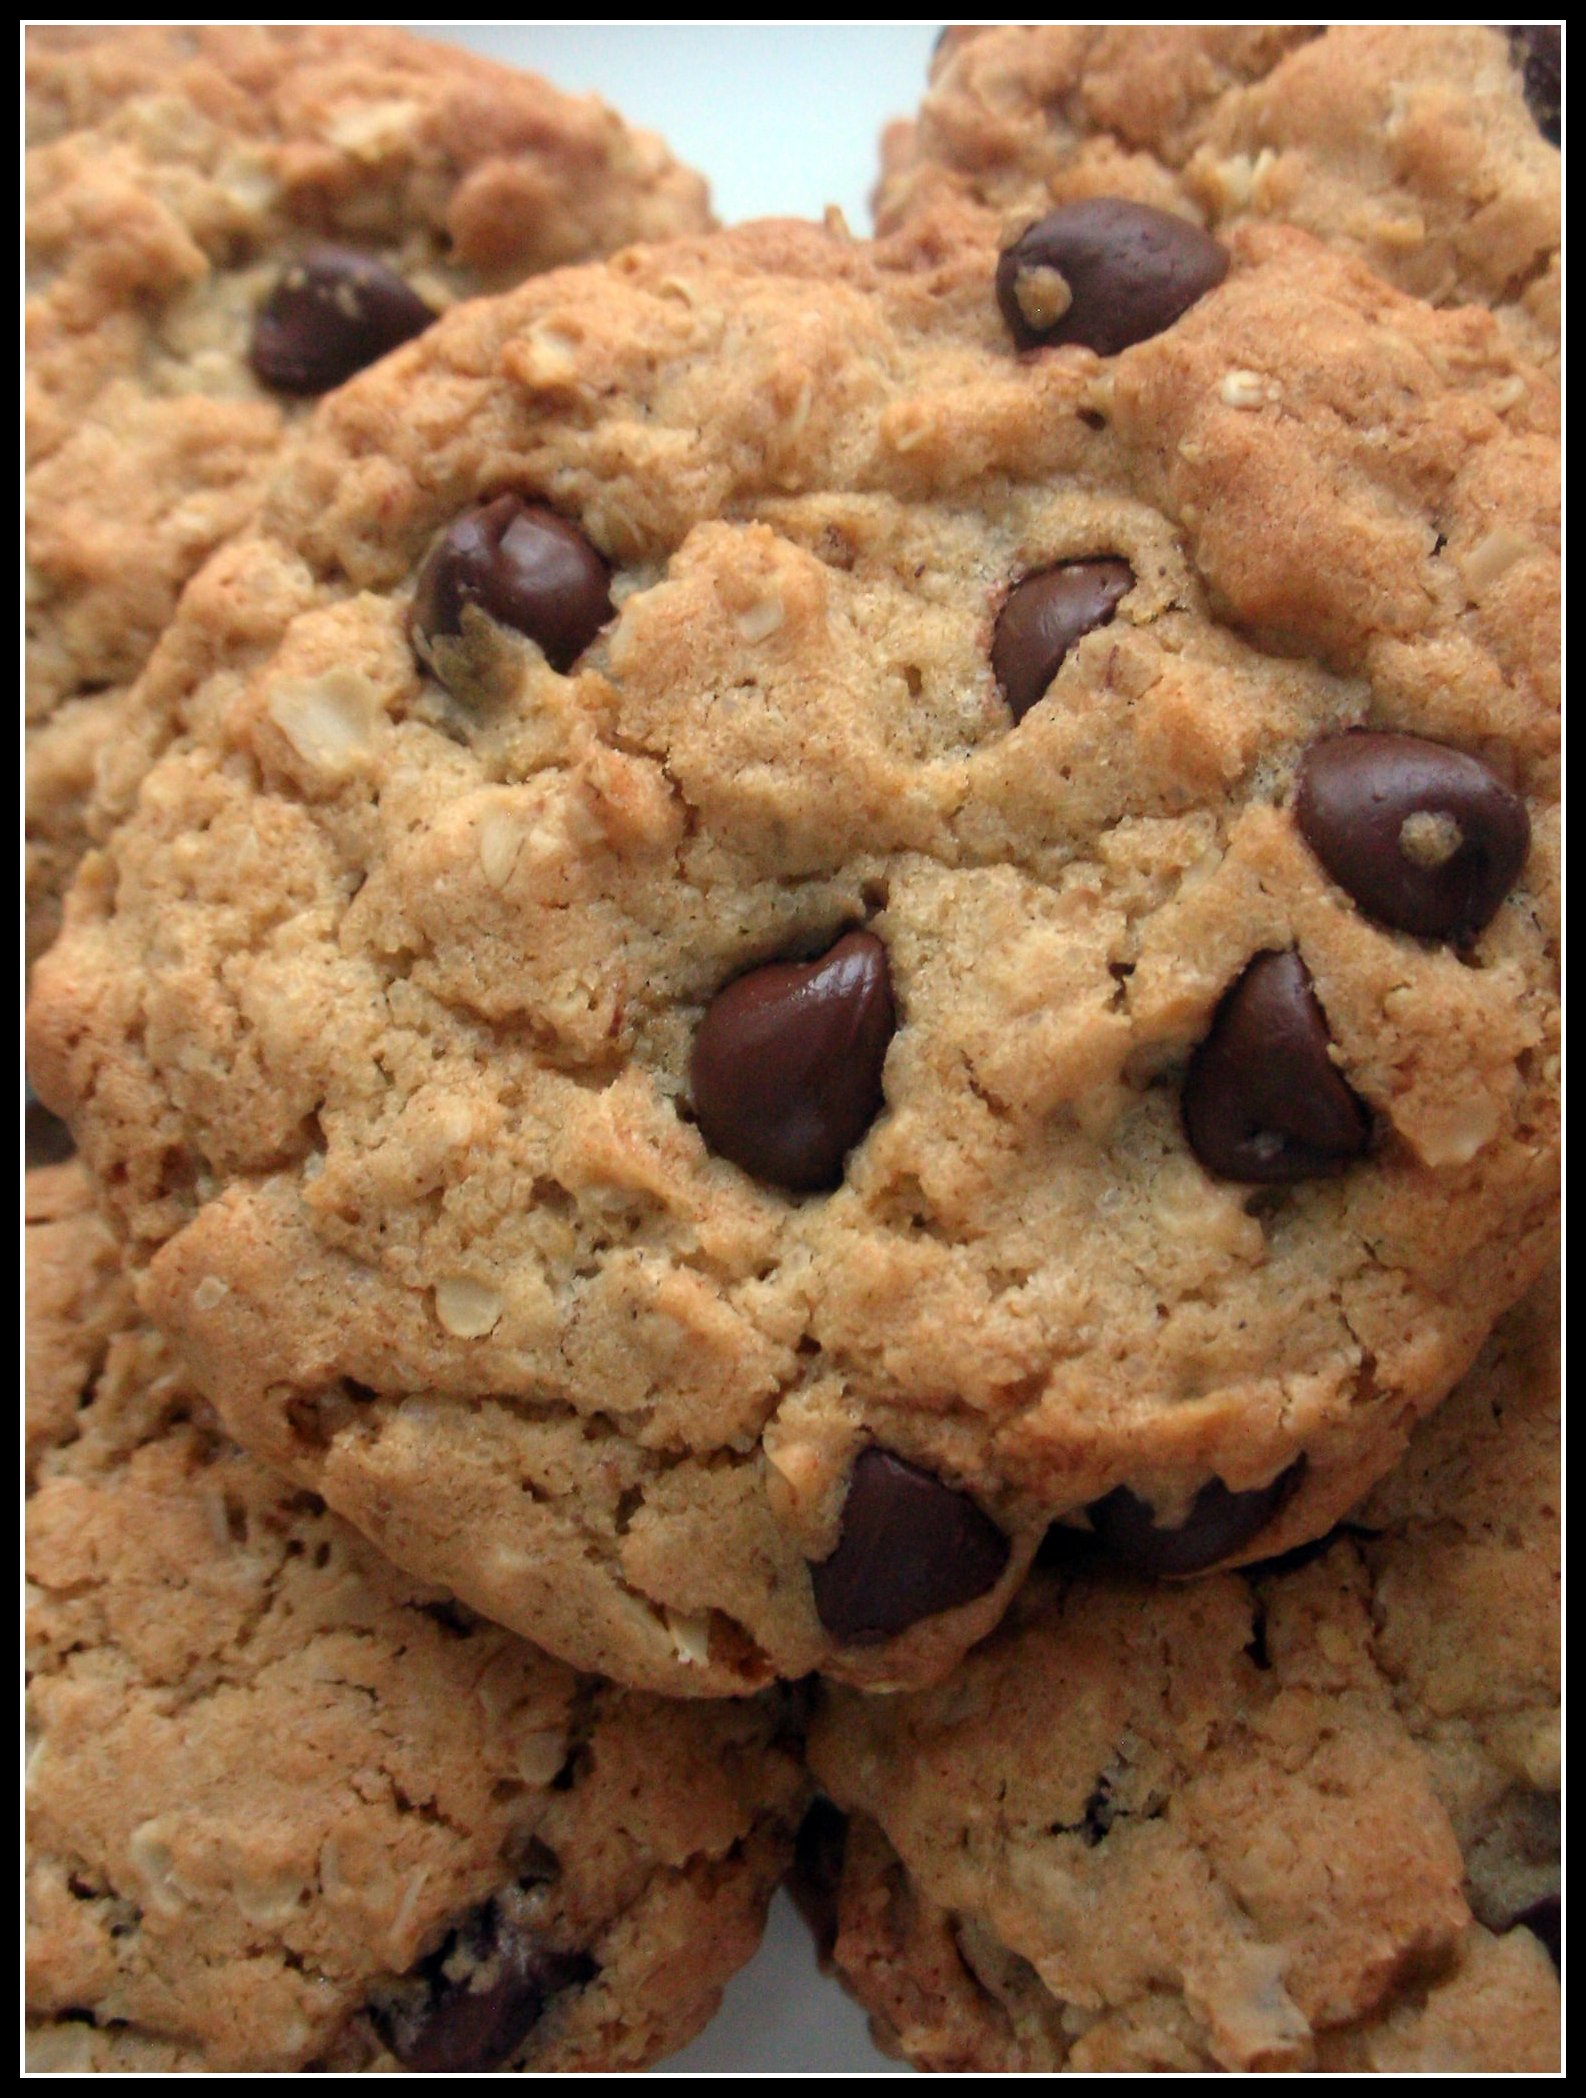 File:Chocolate Chip Oatmeal Cookies detail.jpg - Wikimedia Commons